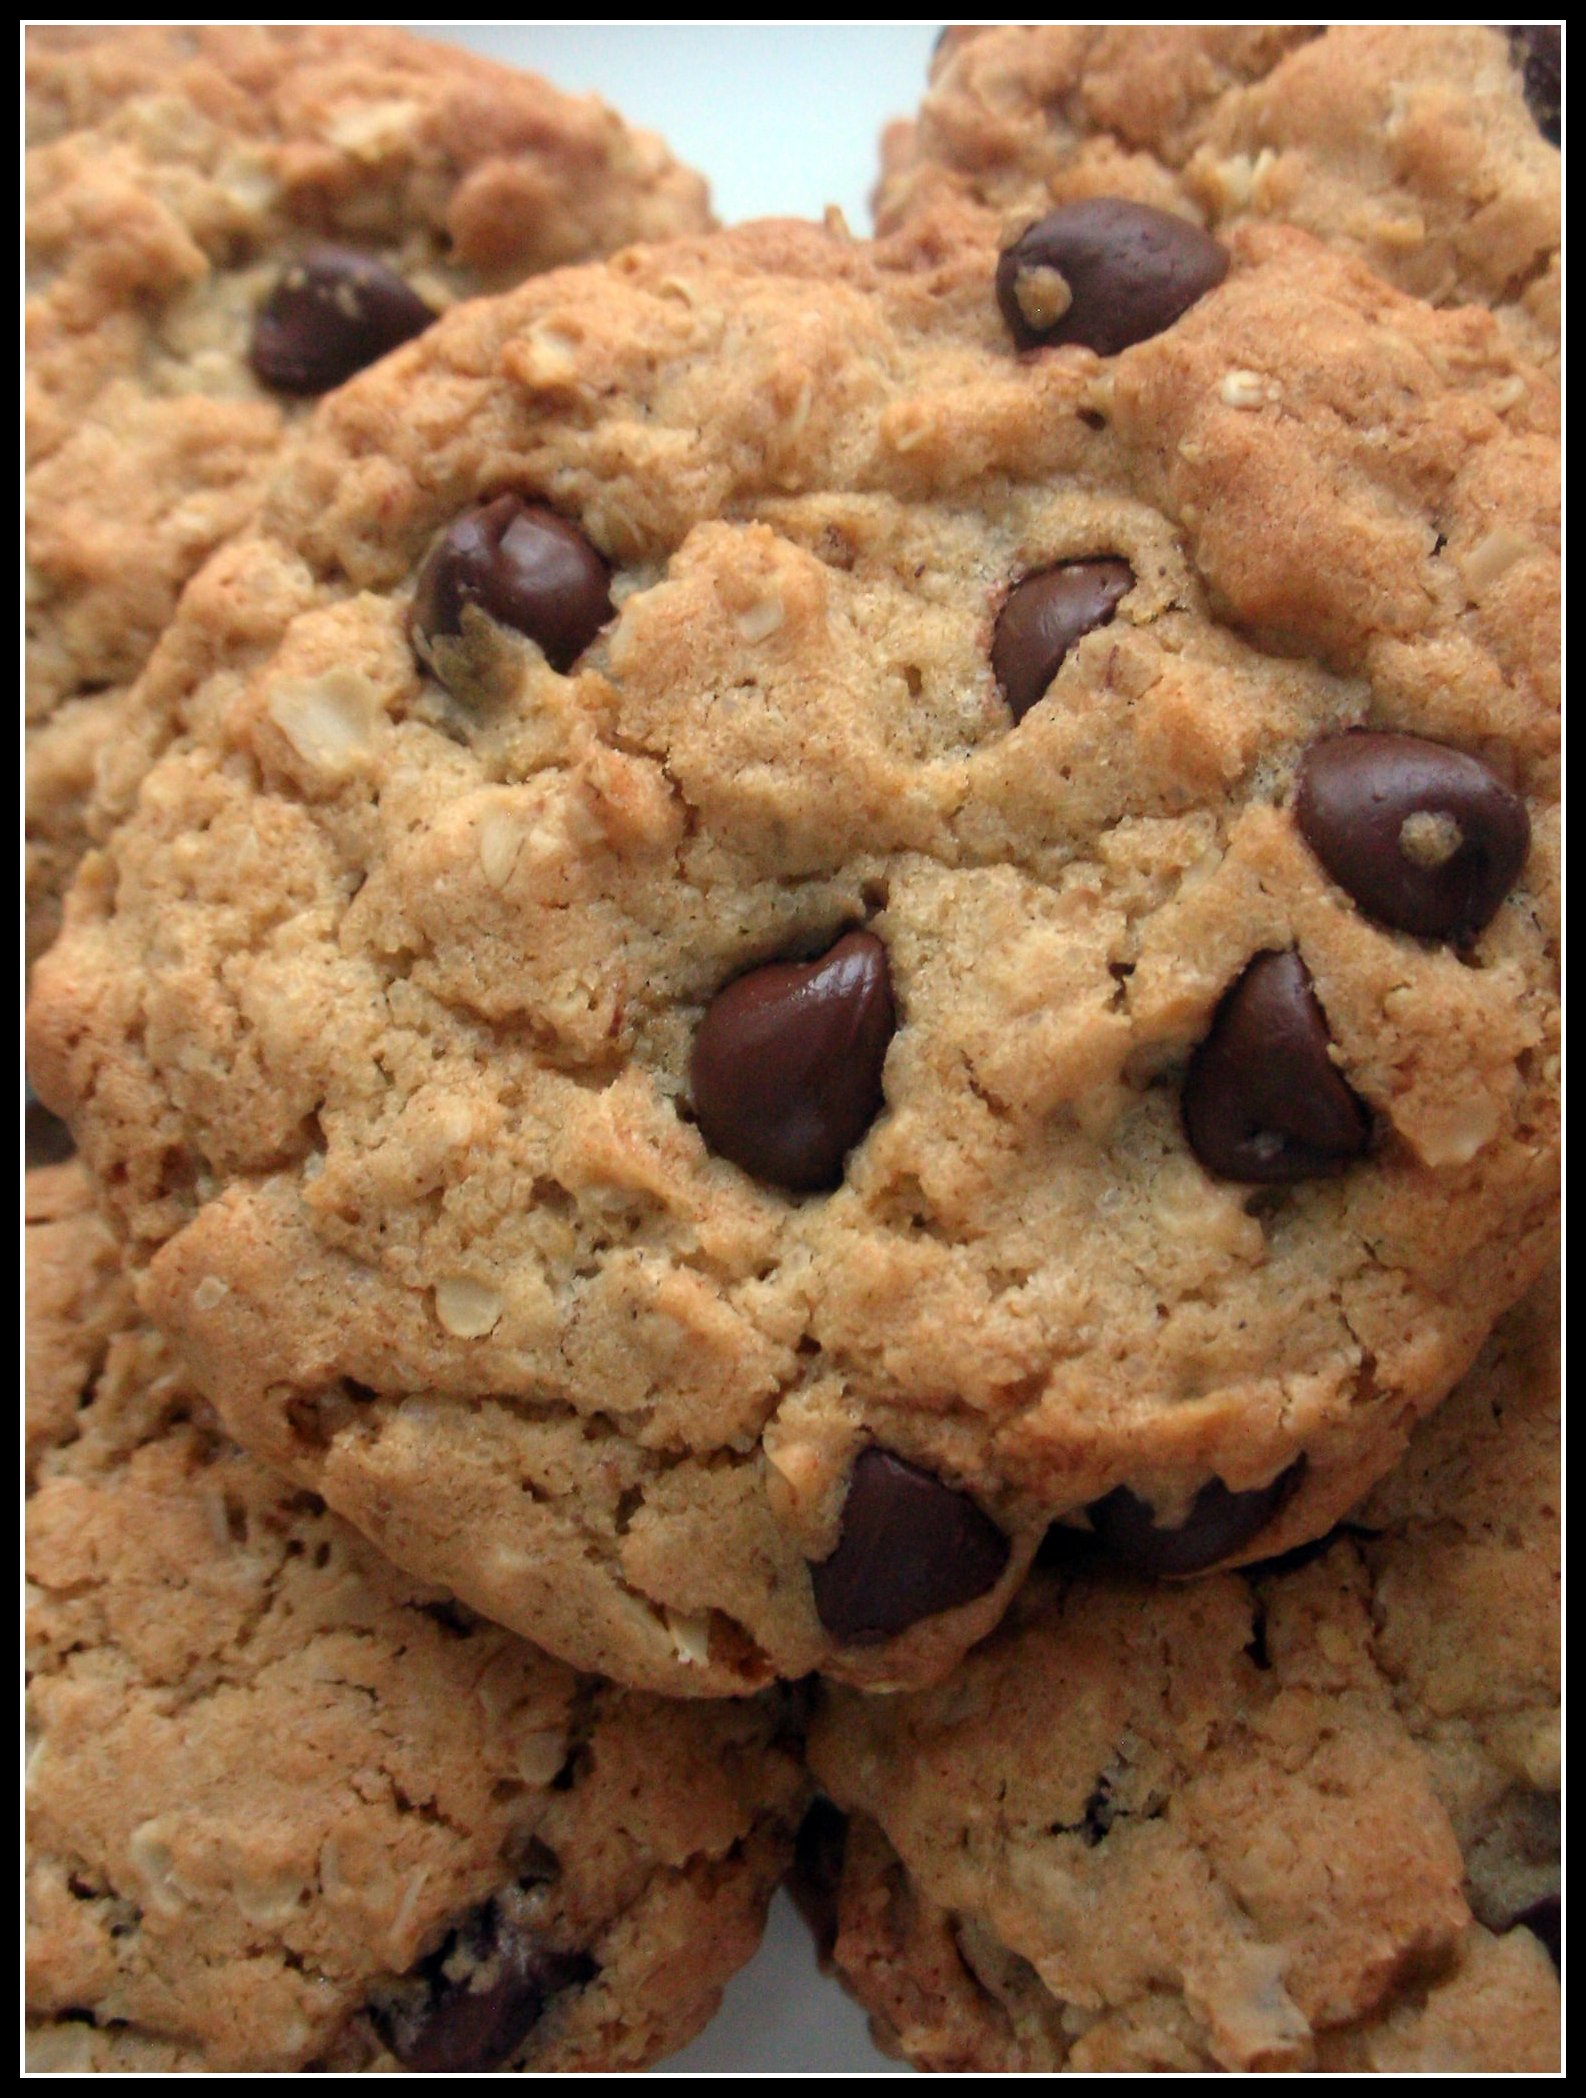 File:Chocolate Chip Oatmeal Cookies detail.jpg - Wikimedia Commons